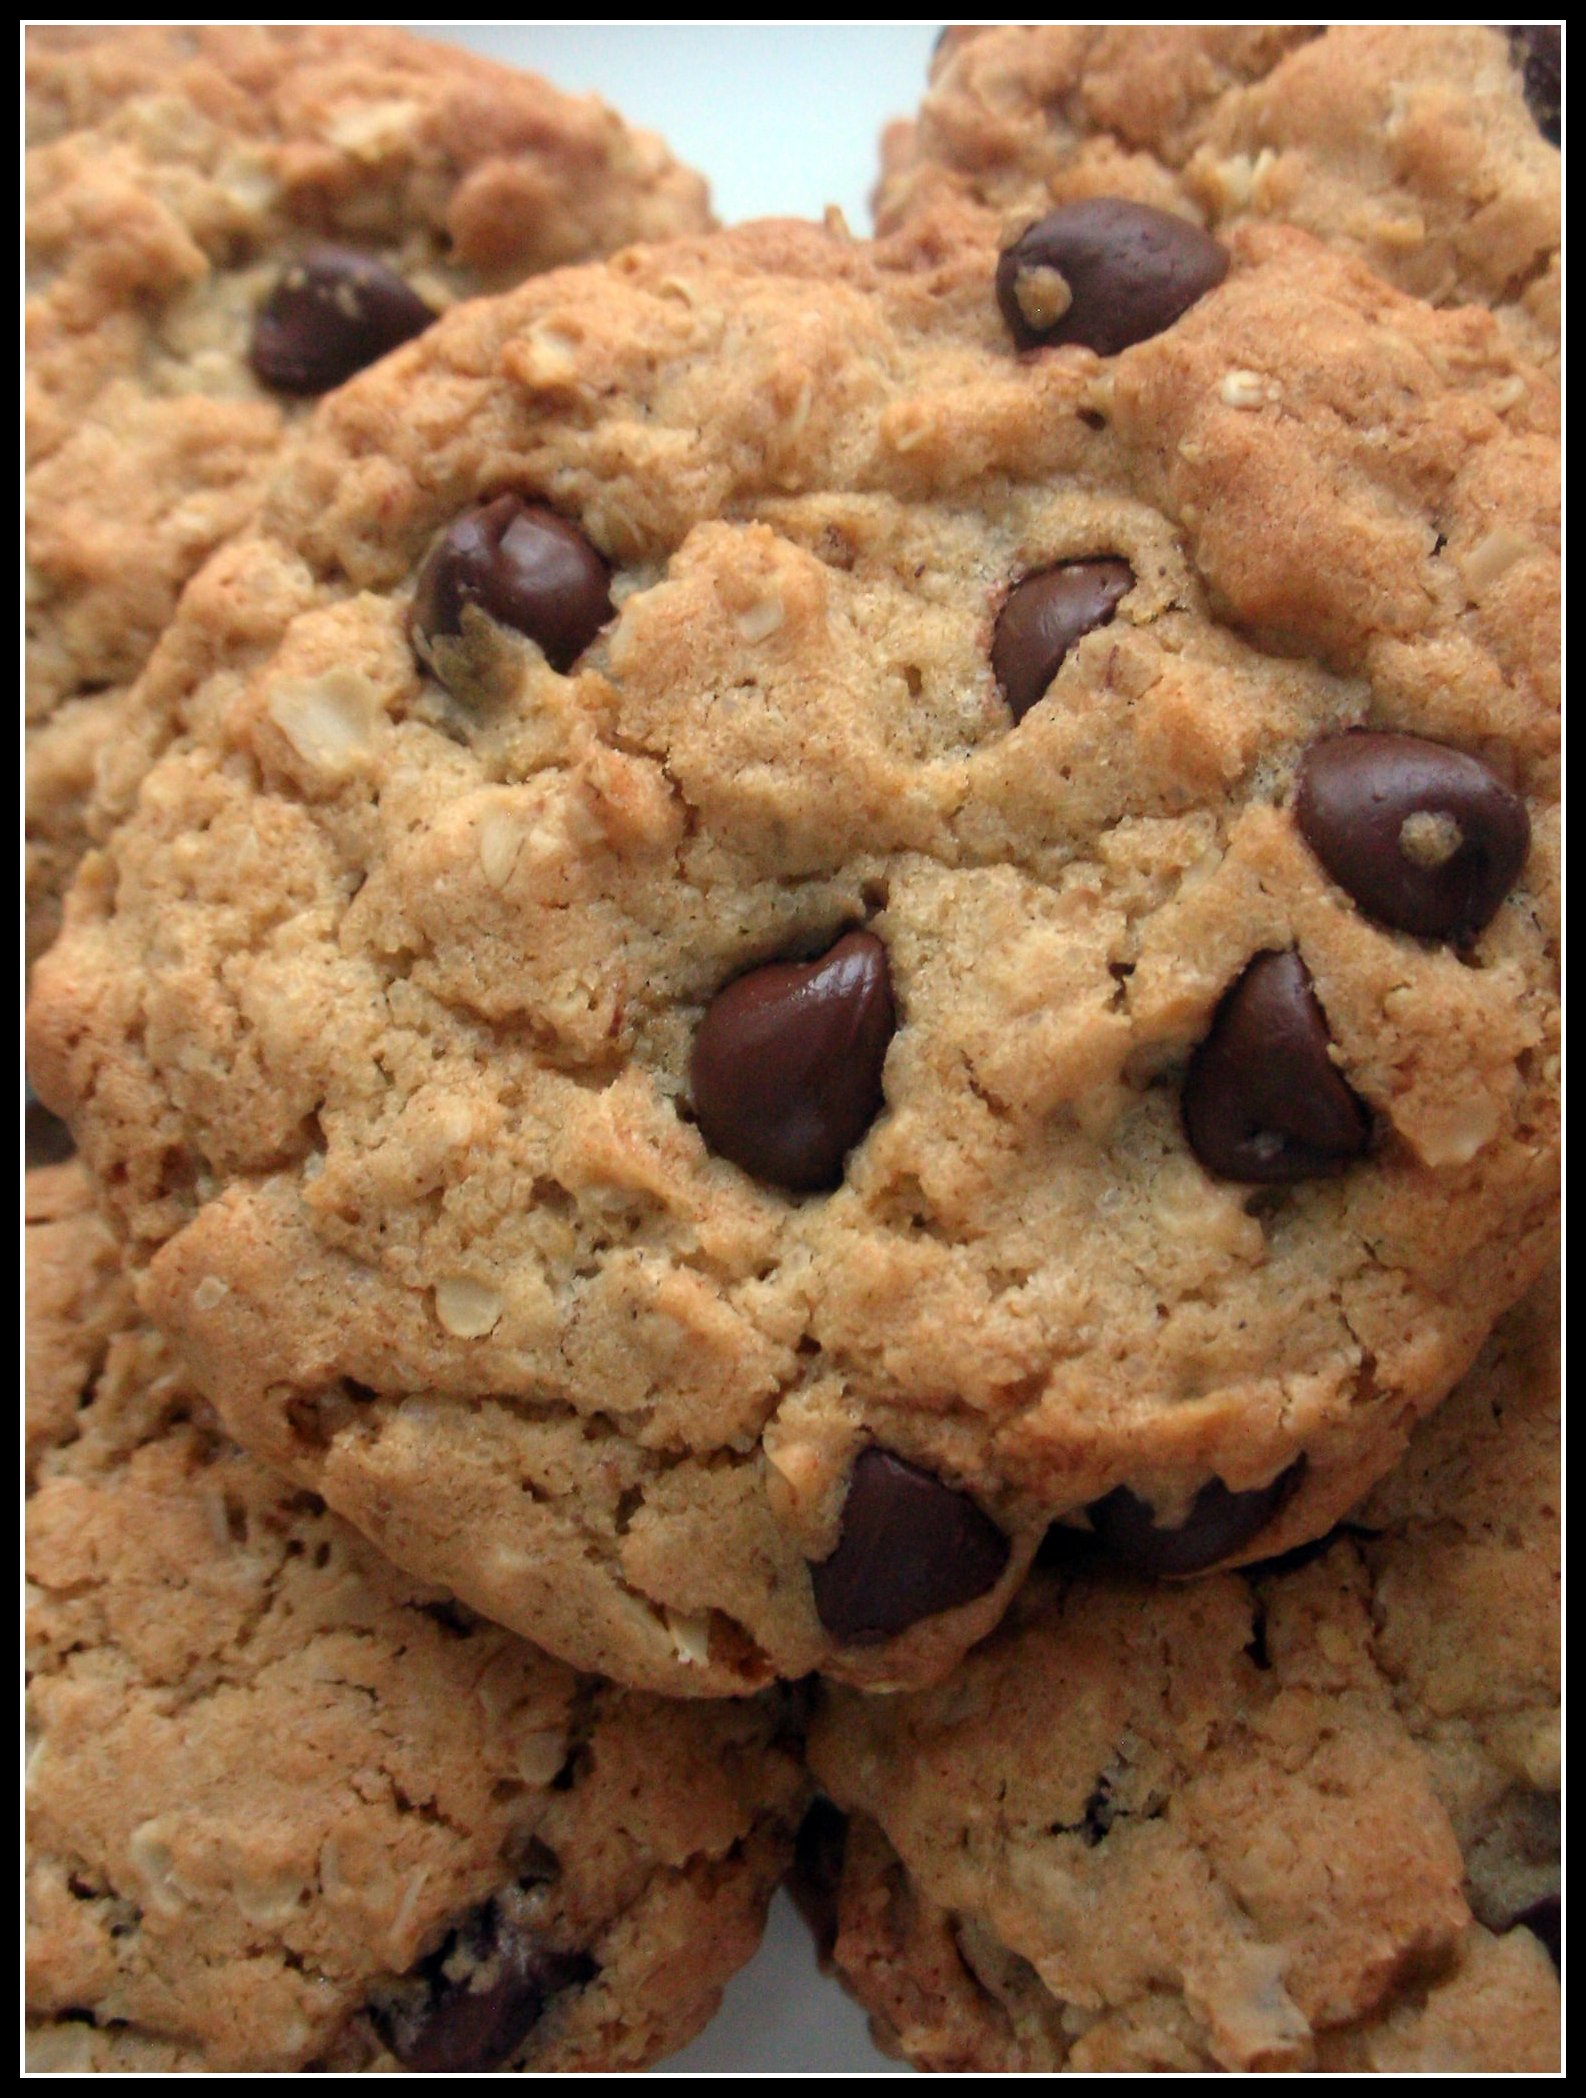 File:Chocolate Chip Oatmeal Cookies detail.jpg - Wikimedia Commons